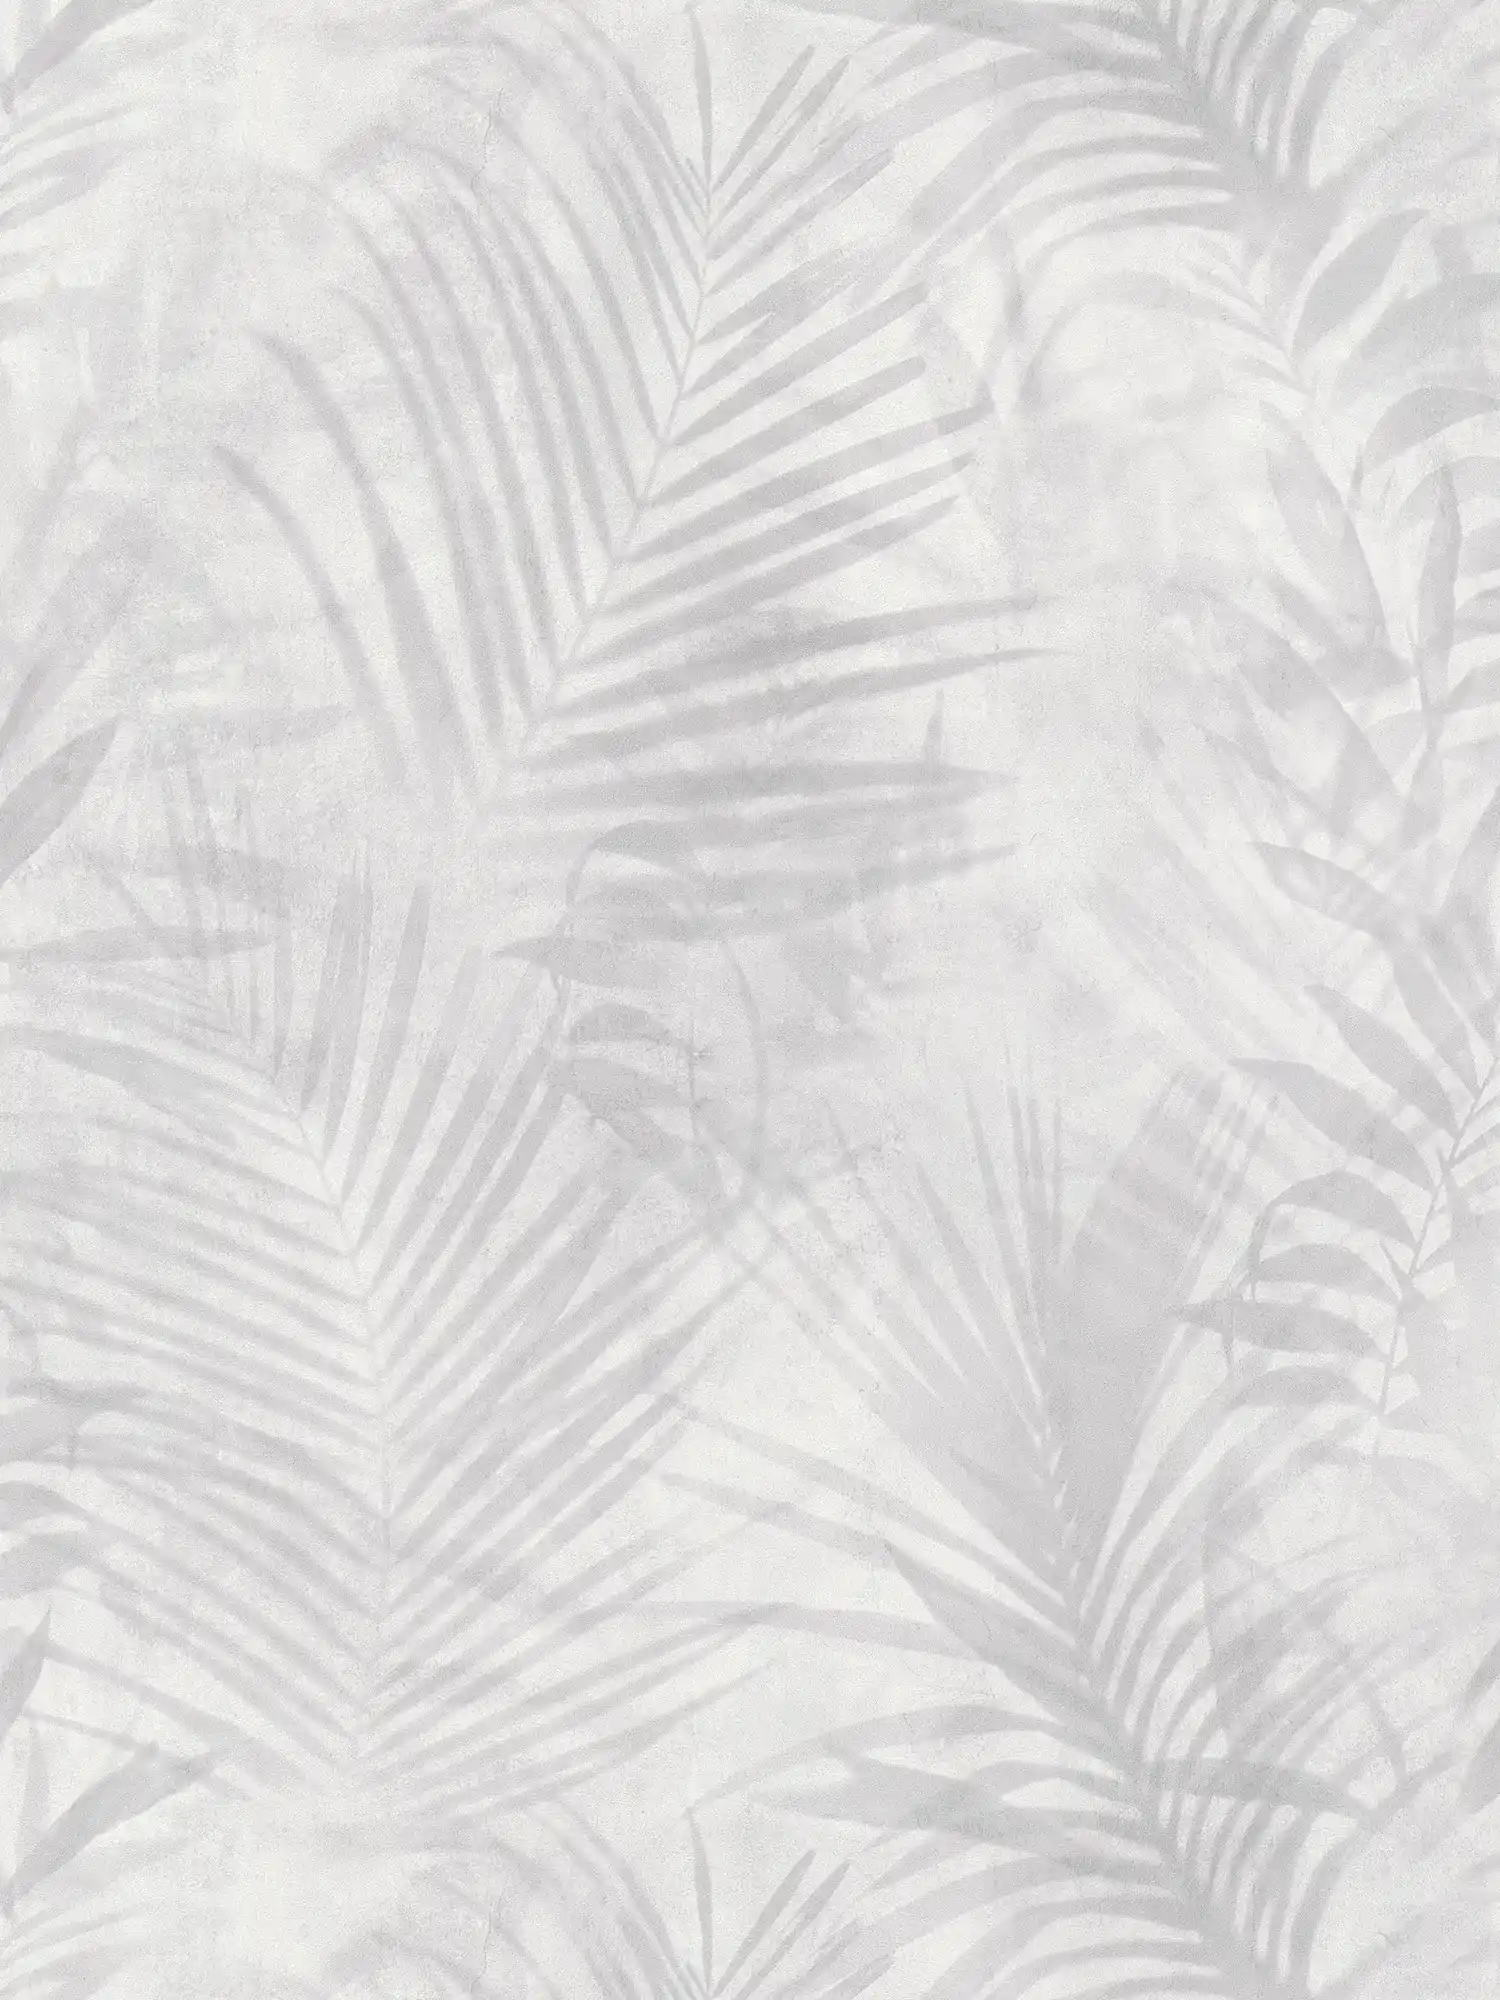         Tapete Palmenmuster in Leinenoptik – Grau, Weiß, Creme
    